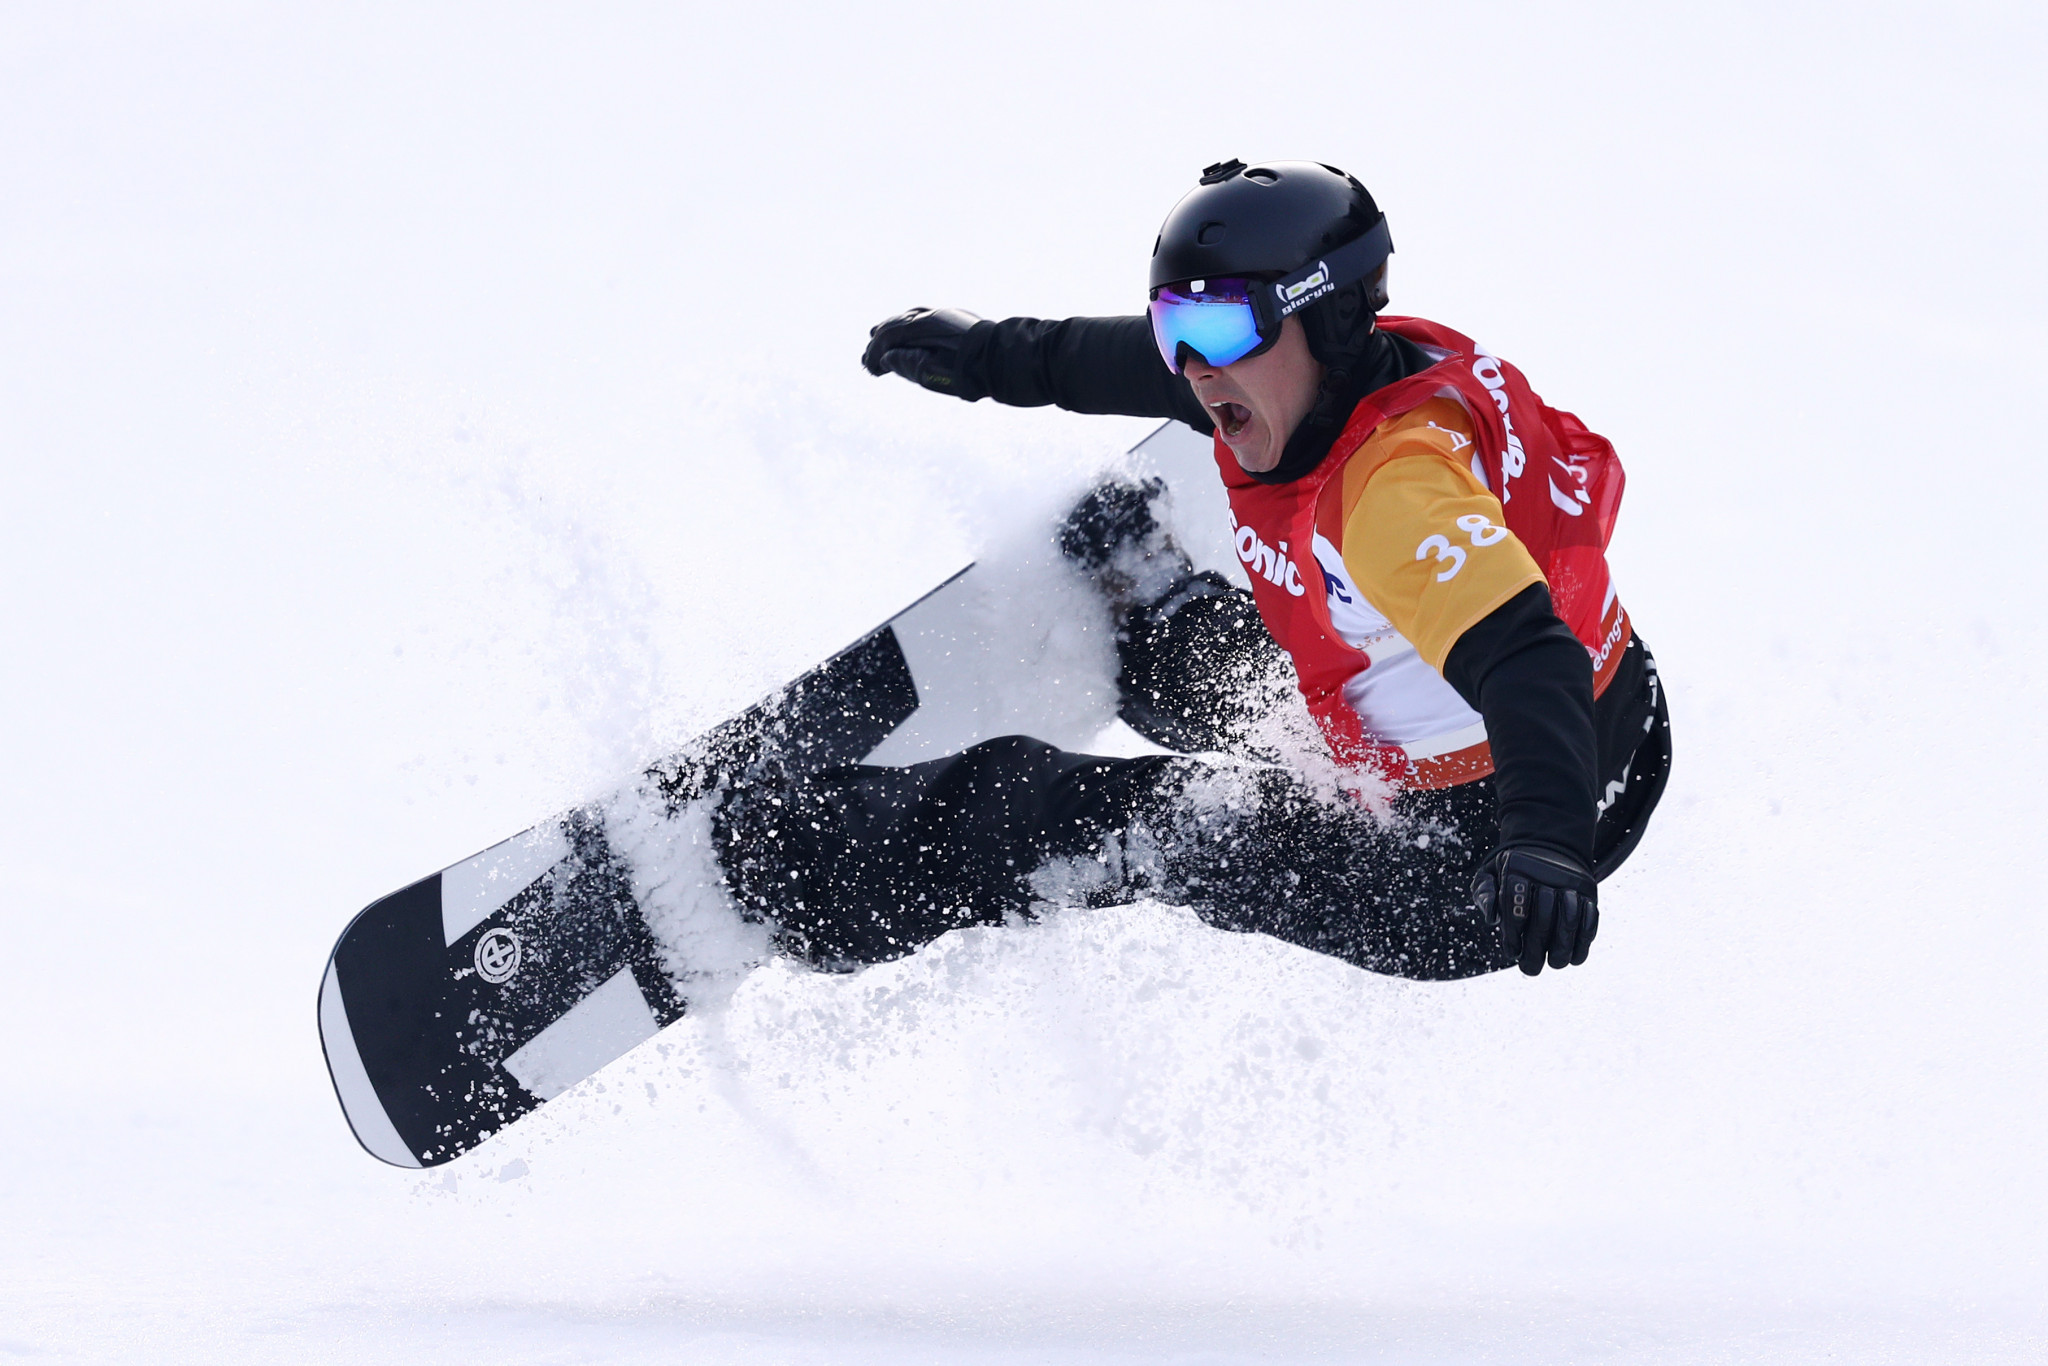 Suur-Hamari wins at home World Para Snowboard Cross World Cup